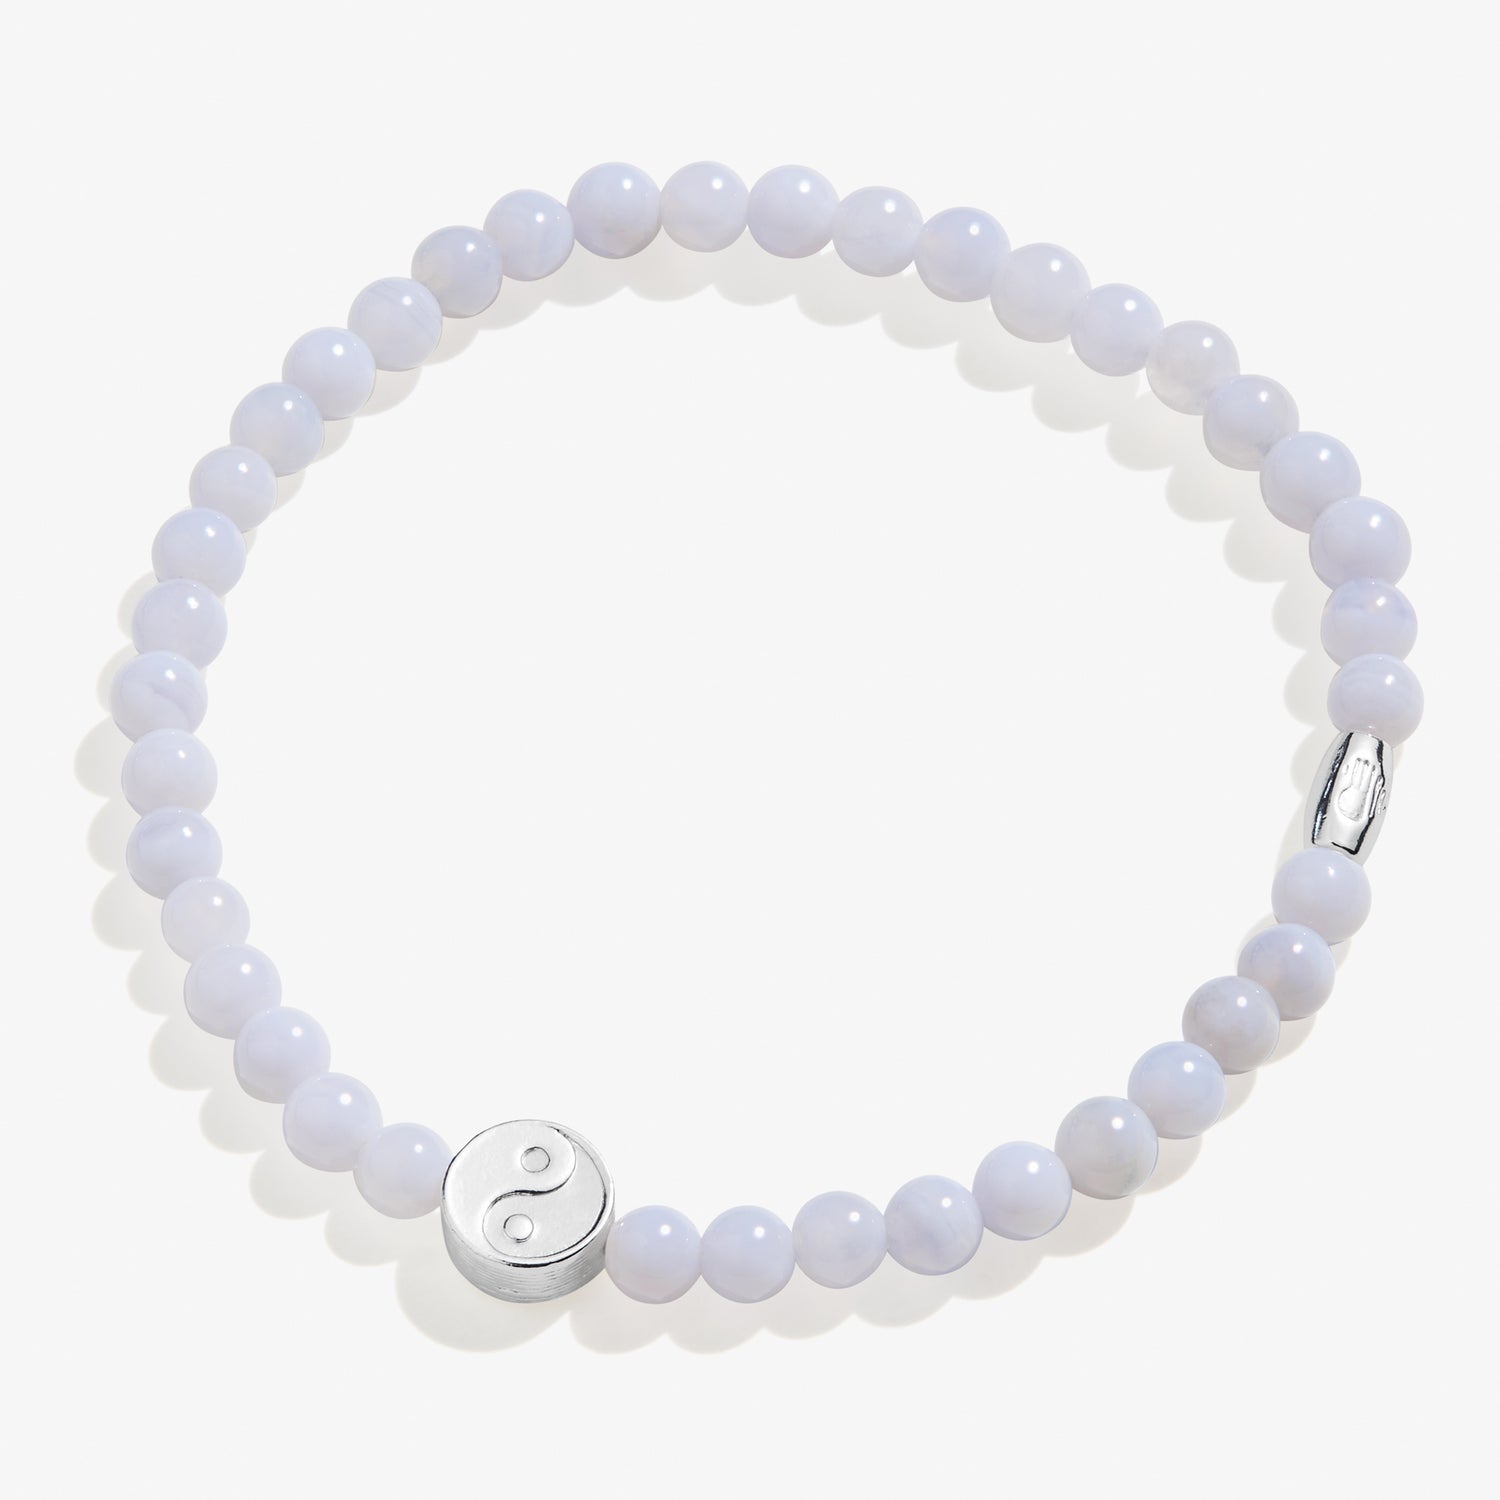 Yin Yang Blue Lace Agate Stretch Bracelet for Balance